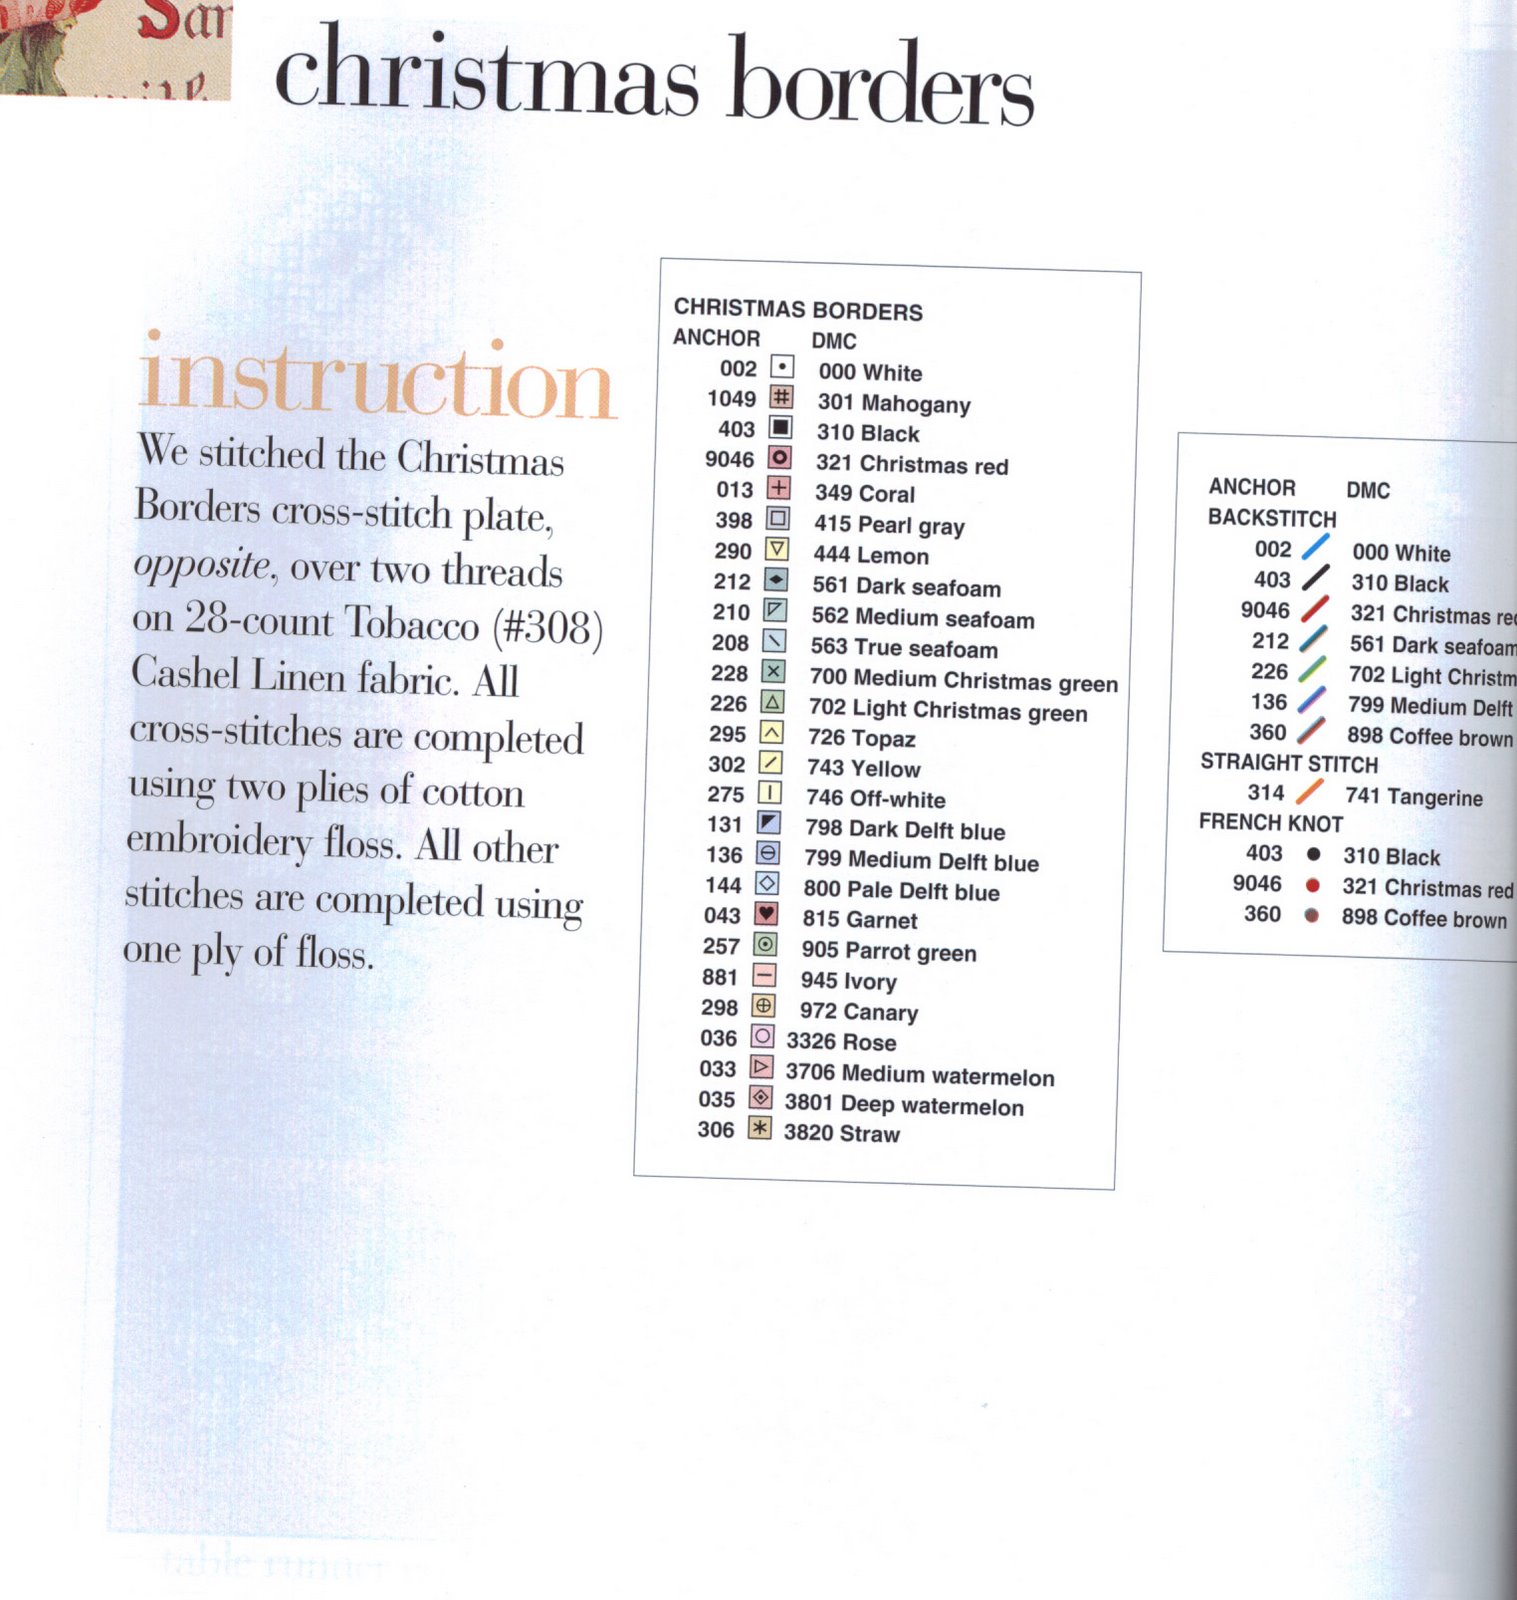 2001 Cross Stitch Designs - christmas borders hilos.jpg